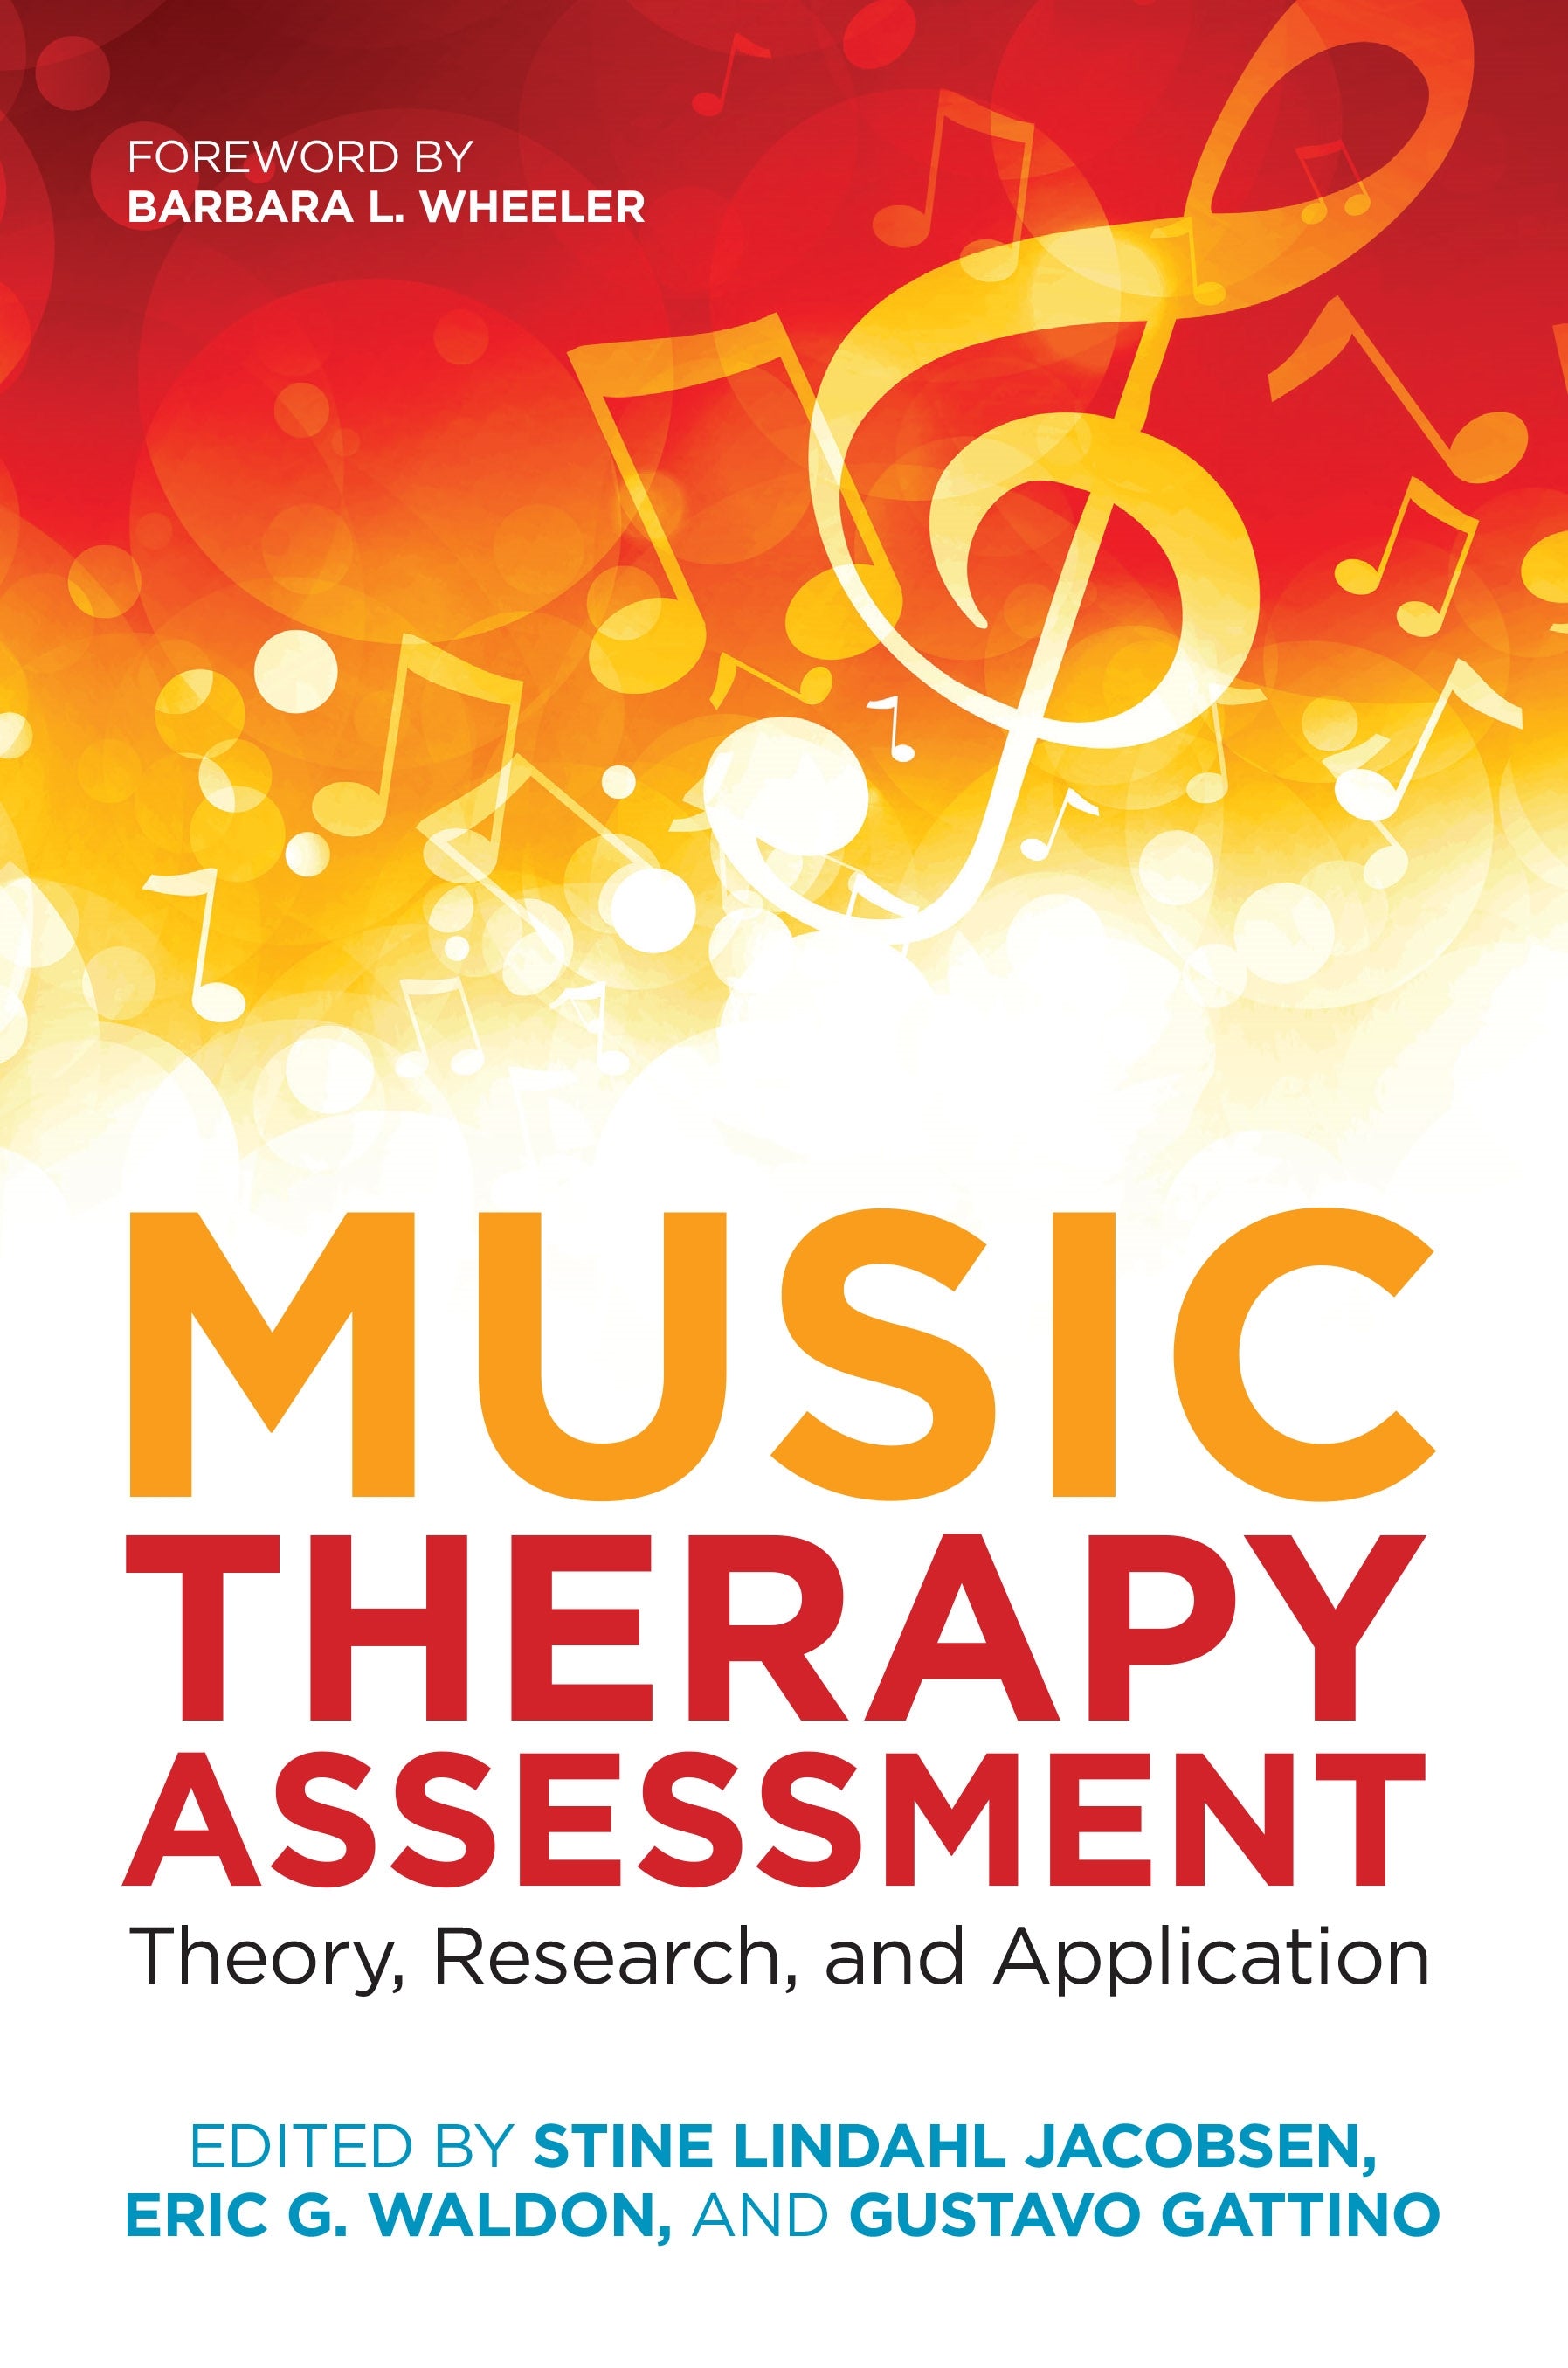 Music Therapy Assessment by Eric G. Waldon, Stine Lindahl Jacobsen, Gustavo Schulz Gattino, Barbara L. Wheeler, No Author Listed